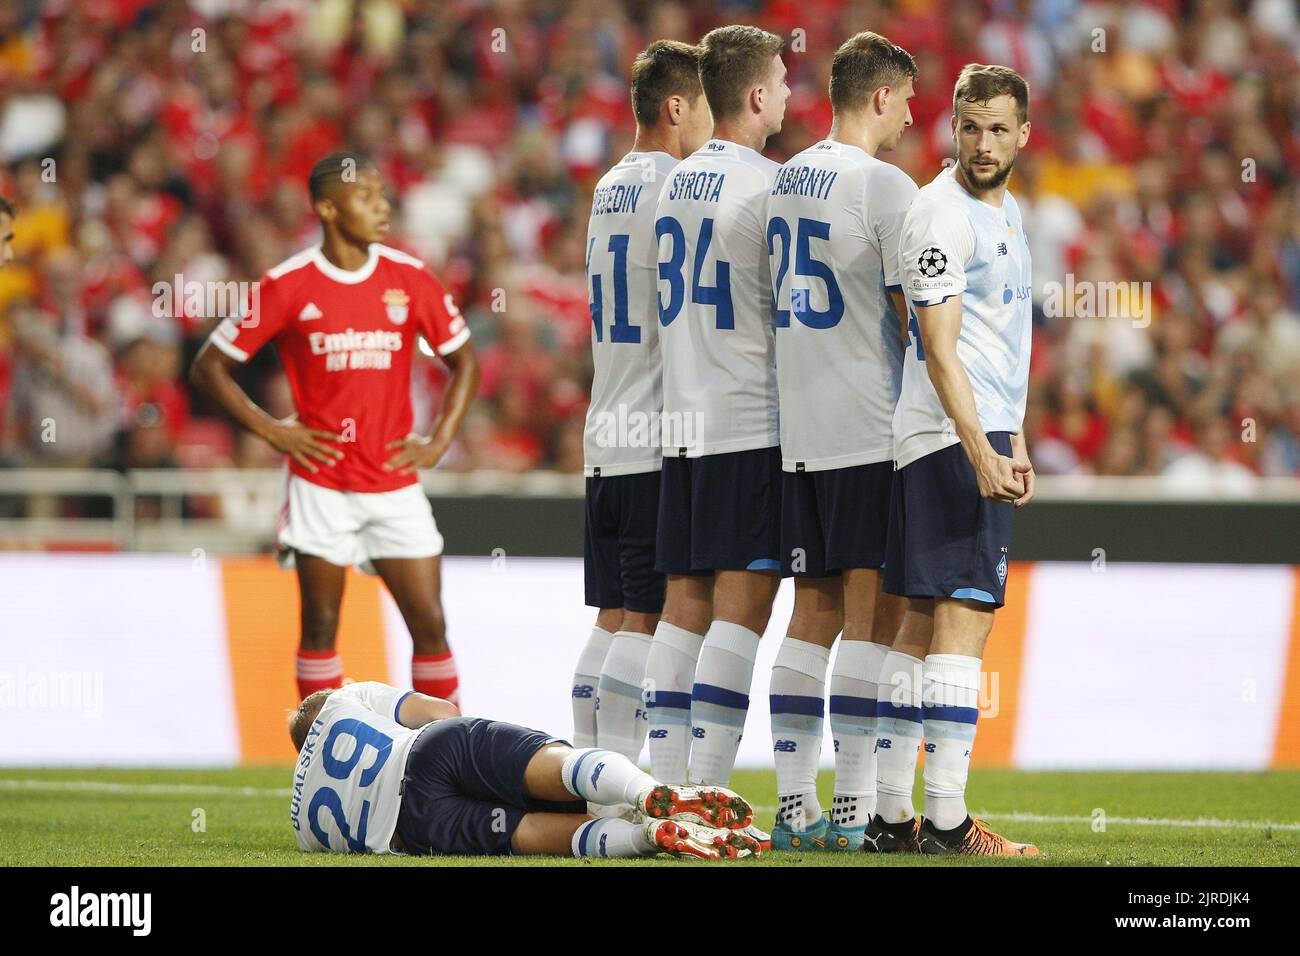 Tottenham Hotspur vs Schalke 04: Live Stream, TV Info, Betting Odds, Start  Time of Club Friendly Match